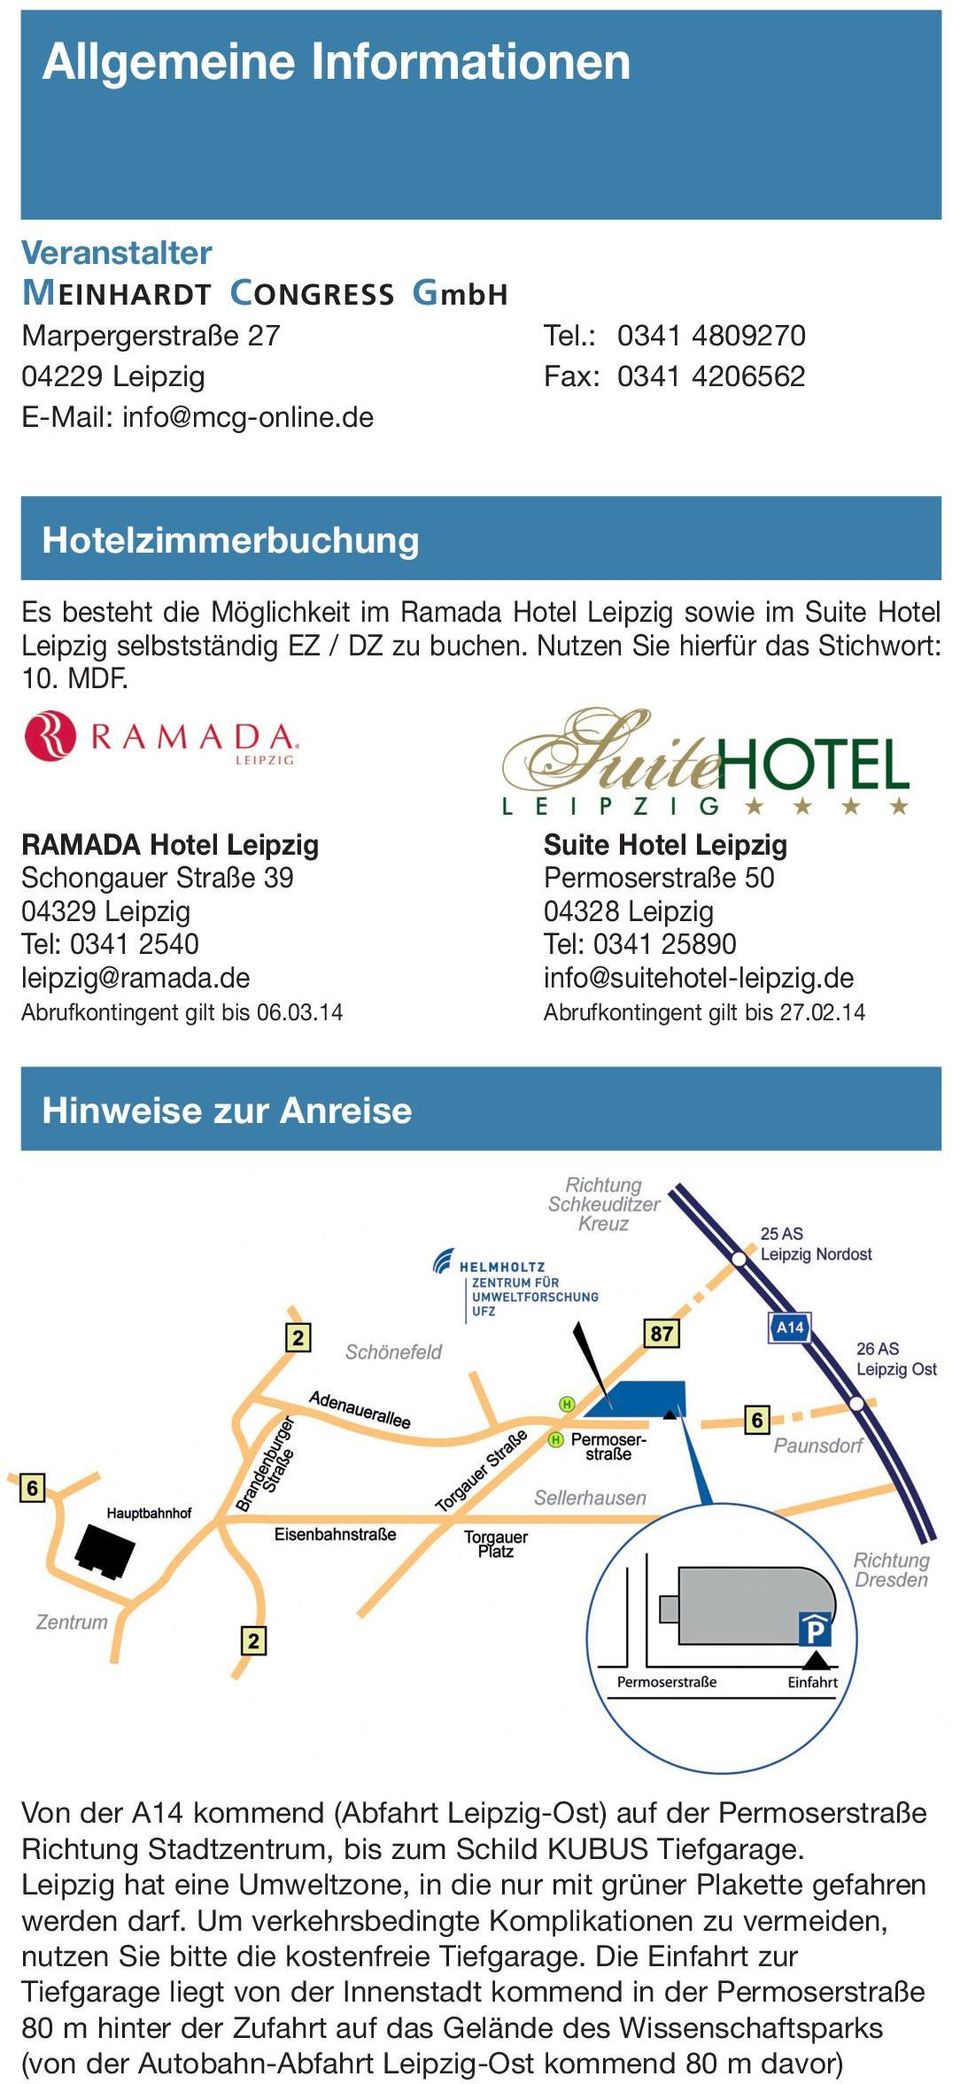 RAMADA Hotel Leipzig Suite Hotel Leipzig Schongauer Straße 39 Permoserstraße 50 04329 Leipzig 04328 Leipzig Tel: 0341 2540 Tel: 0341 25890 leipzig@ramada.de info@suitehotel-leipzig.